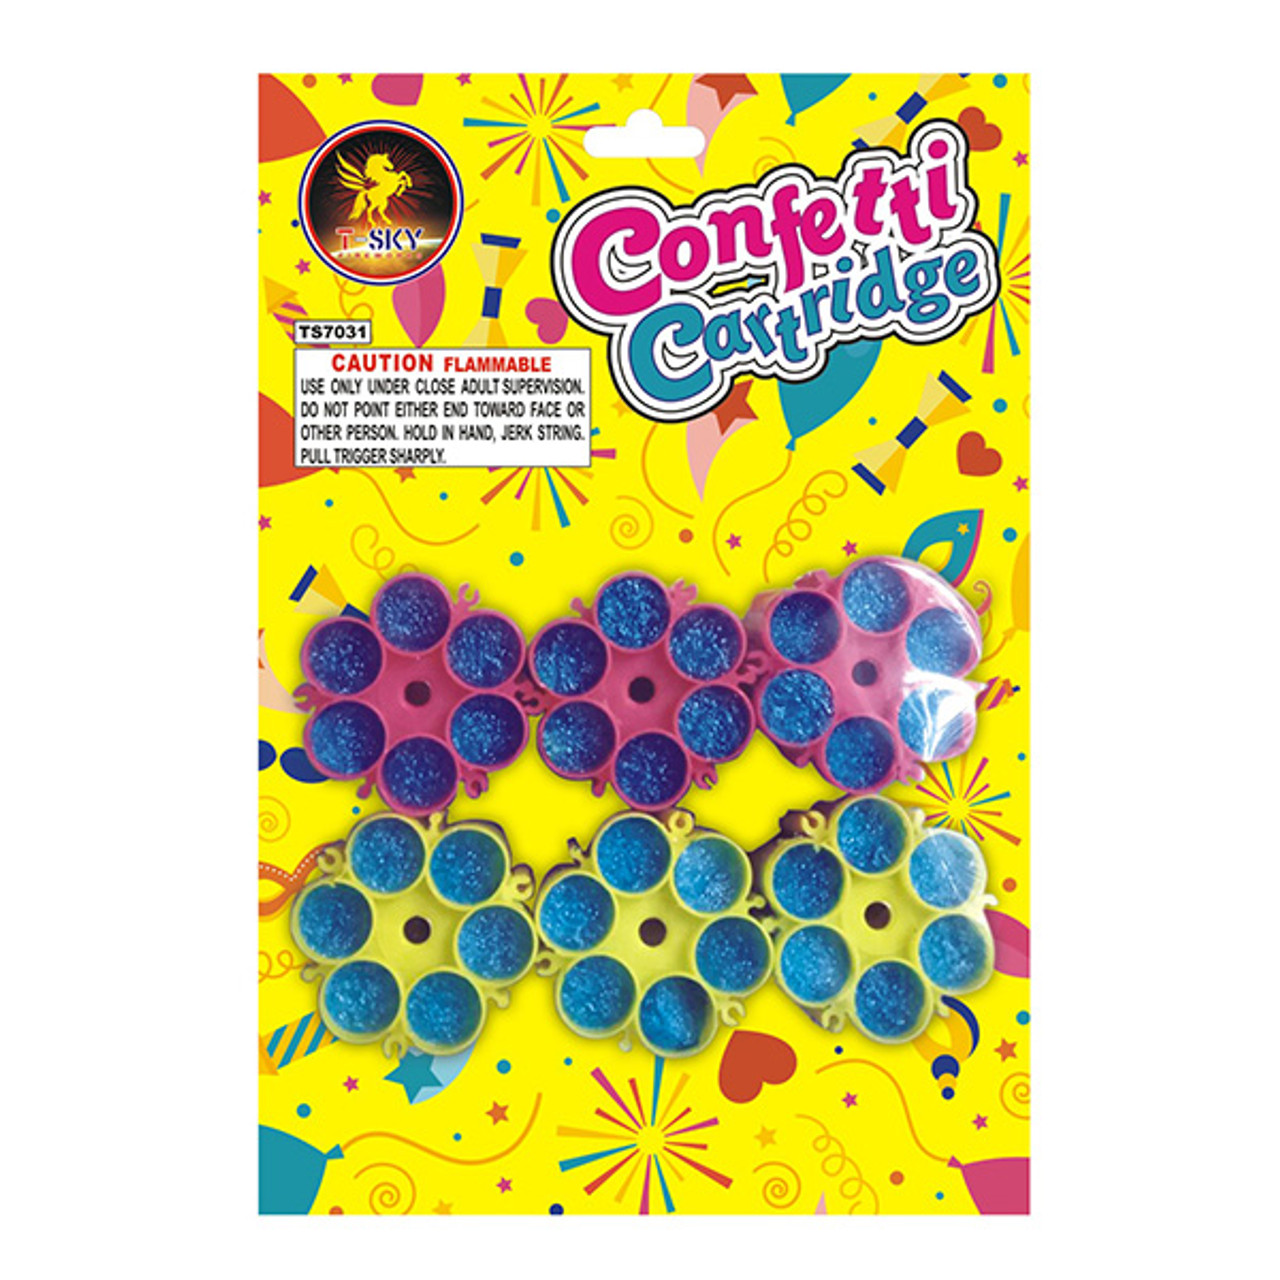 Confetti Cartridges Fireworks